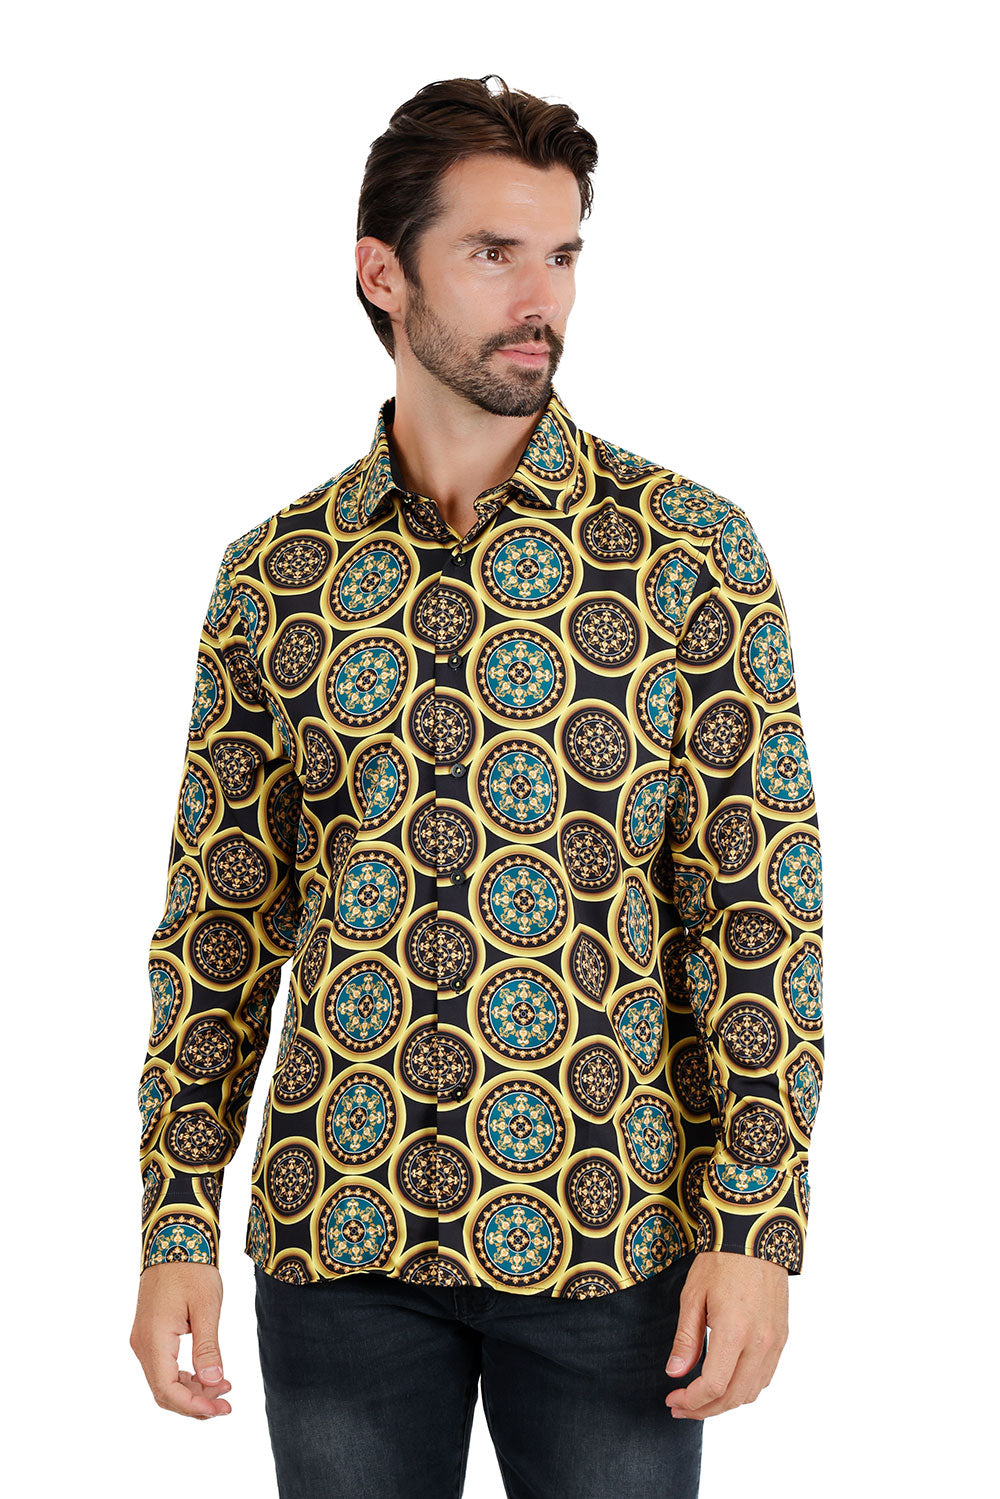 Vassaeri Men's Geometric Design Printed Long Sleeve Shirts 3VS20 Black Gold